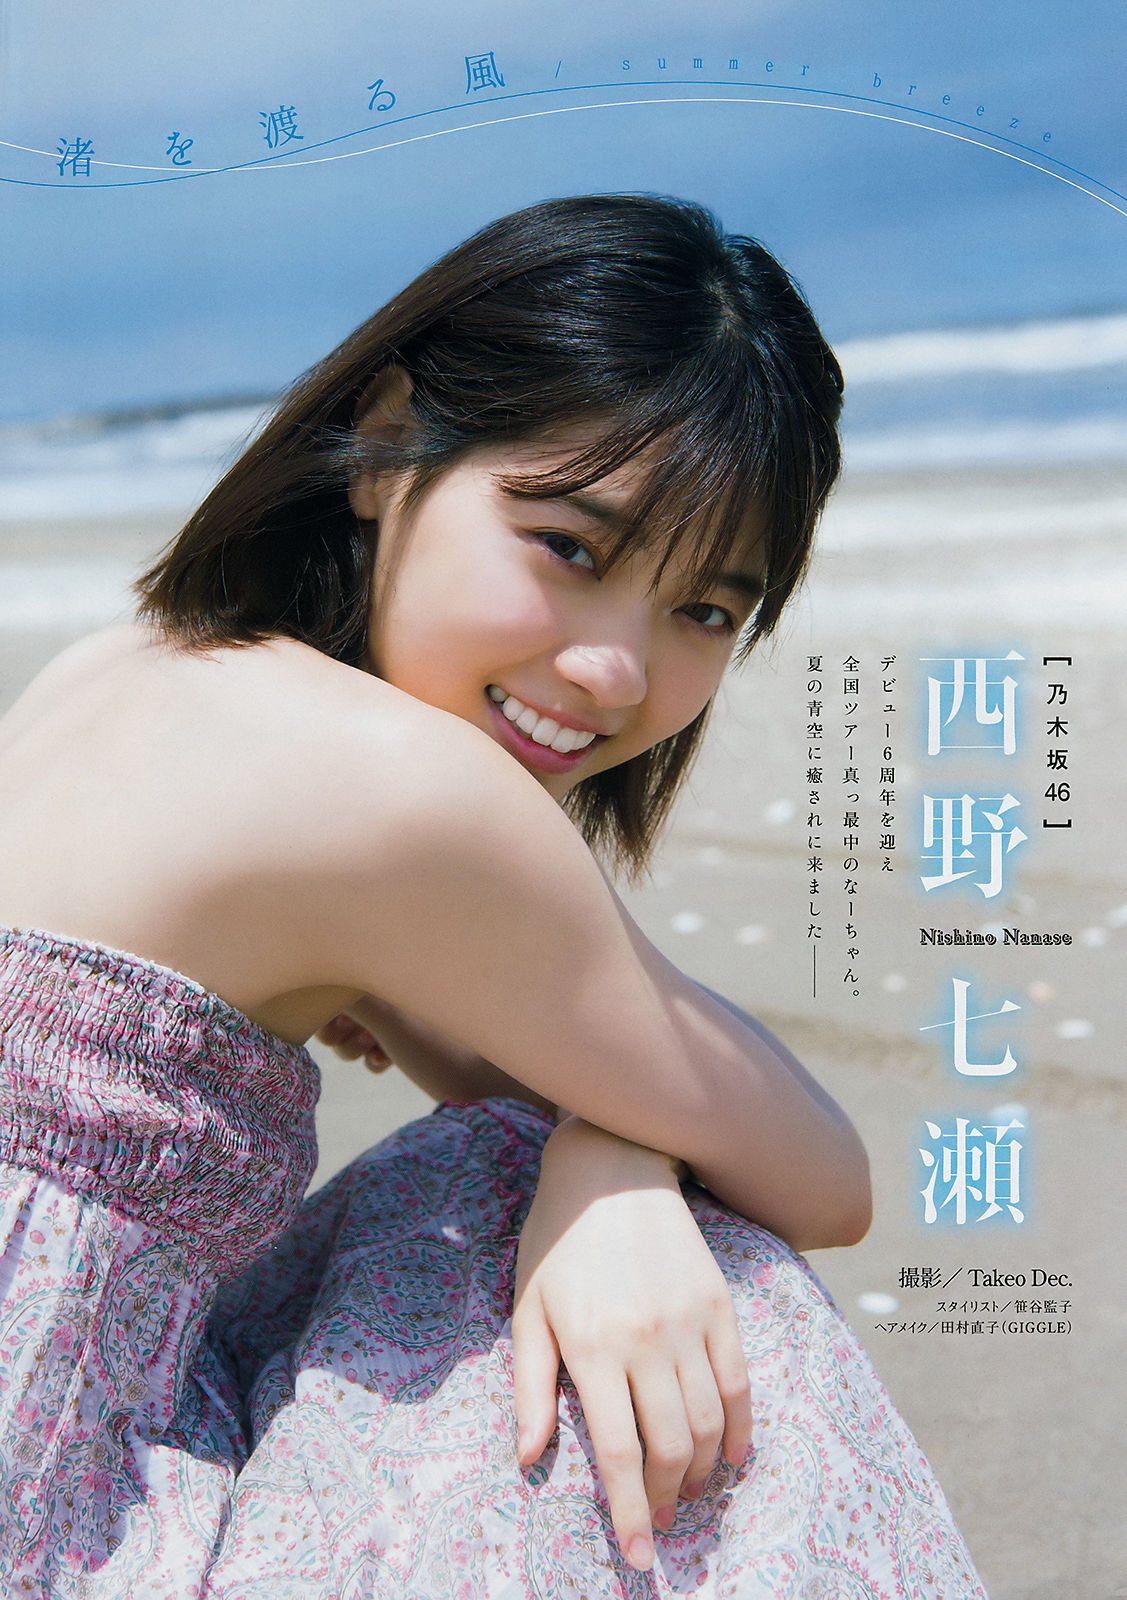 [Young Magazine]清纯甜美:西野七濑高品质写真作品个人分享(12P)